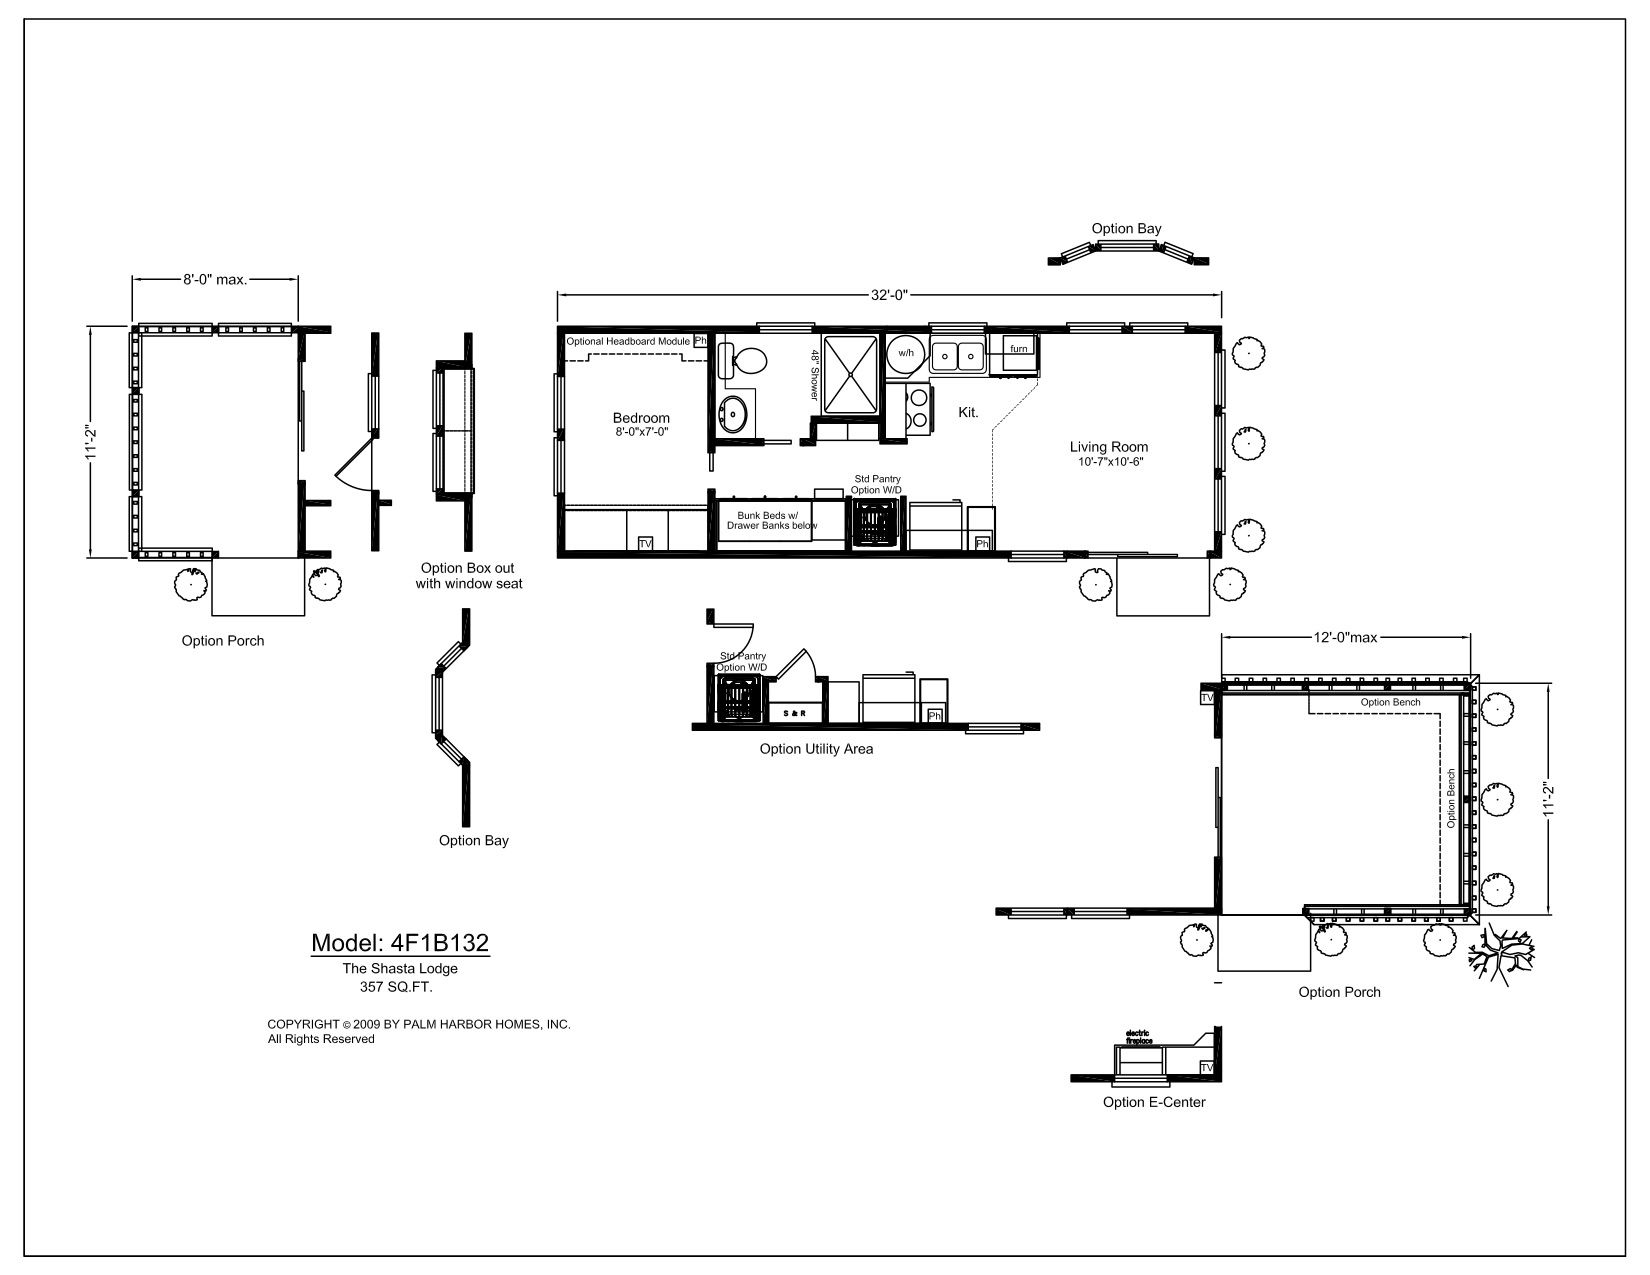 Homes Direct Modular Homes - Model 4F1B132 - Floorplan